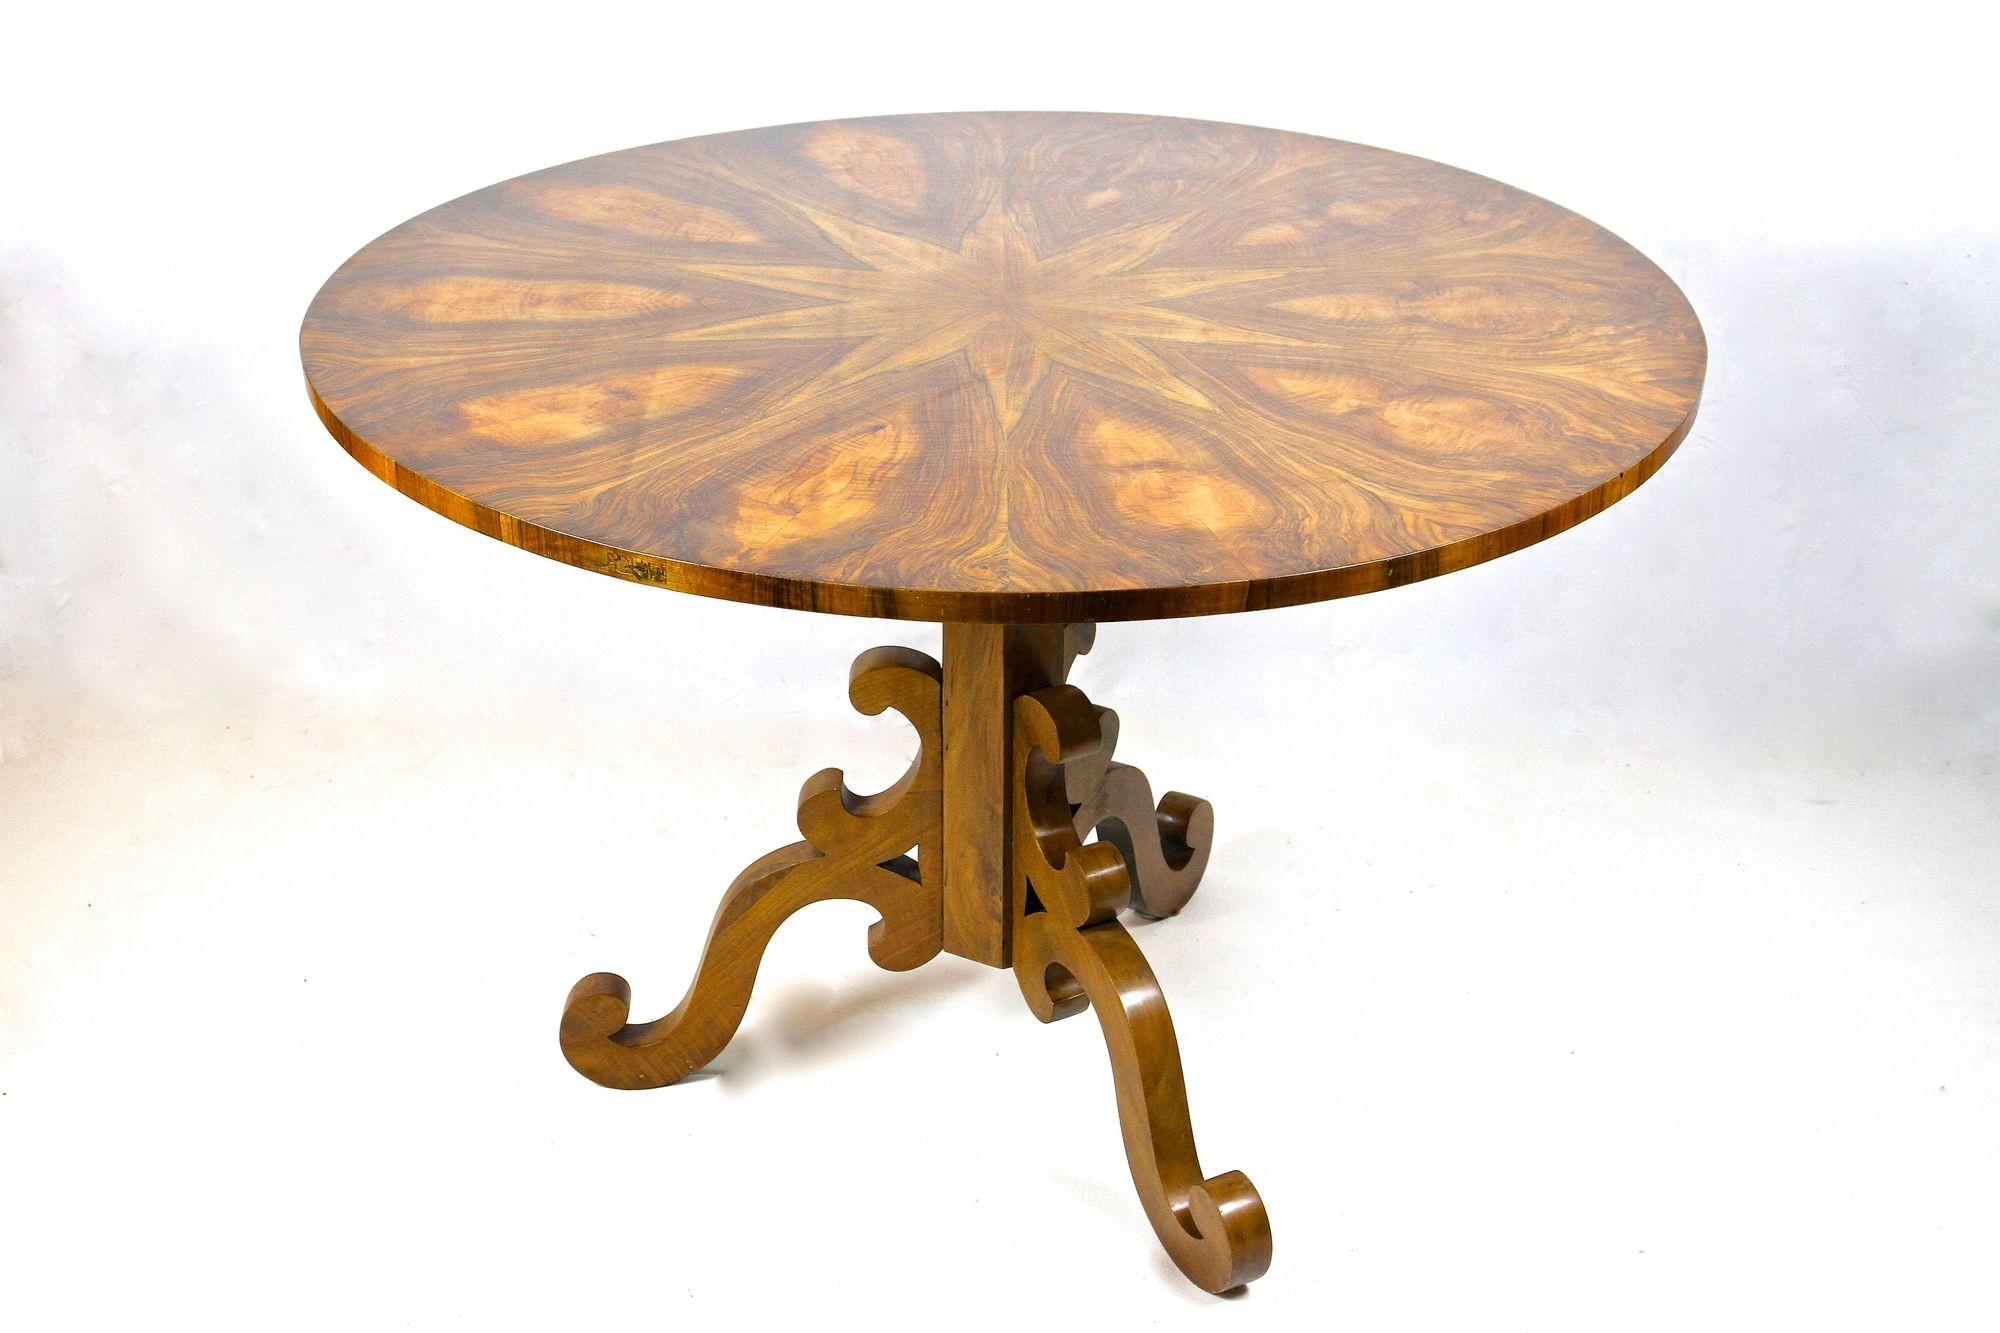 Polished 19th Century Biedermeier Nutwood Dining Table / Center Table, Austria, ca 1830 For Sale